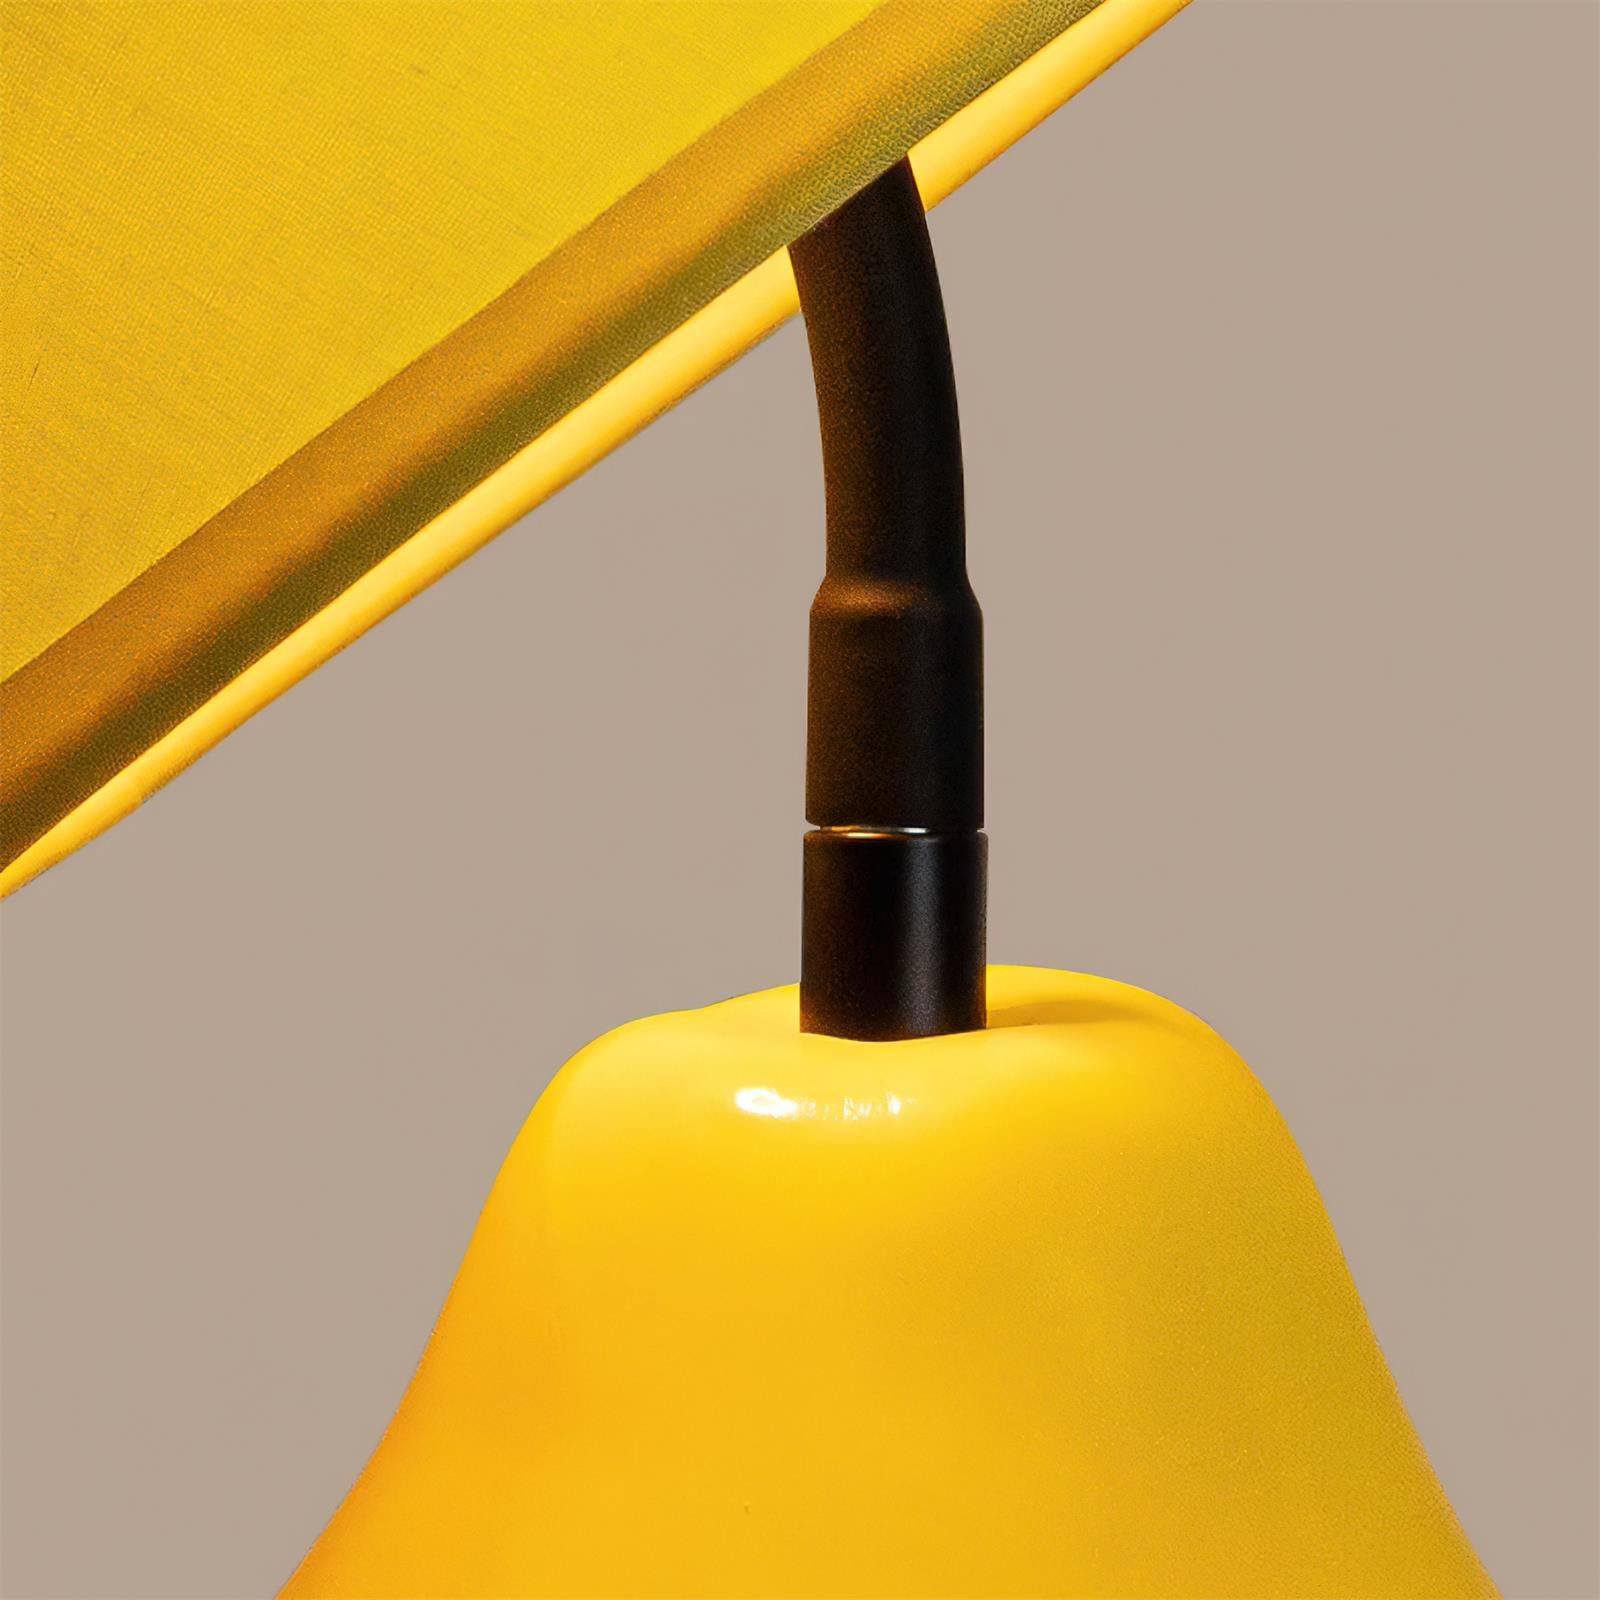 Pear Table Lamp 7″- 12.6″